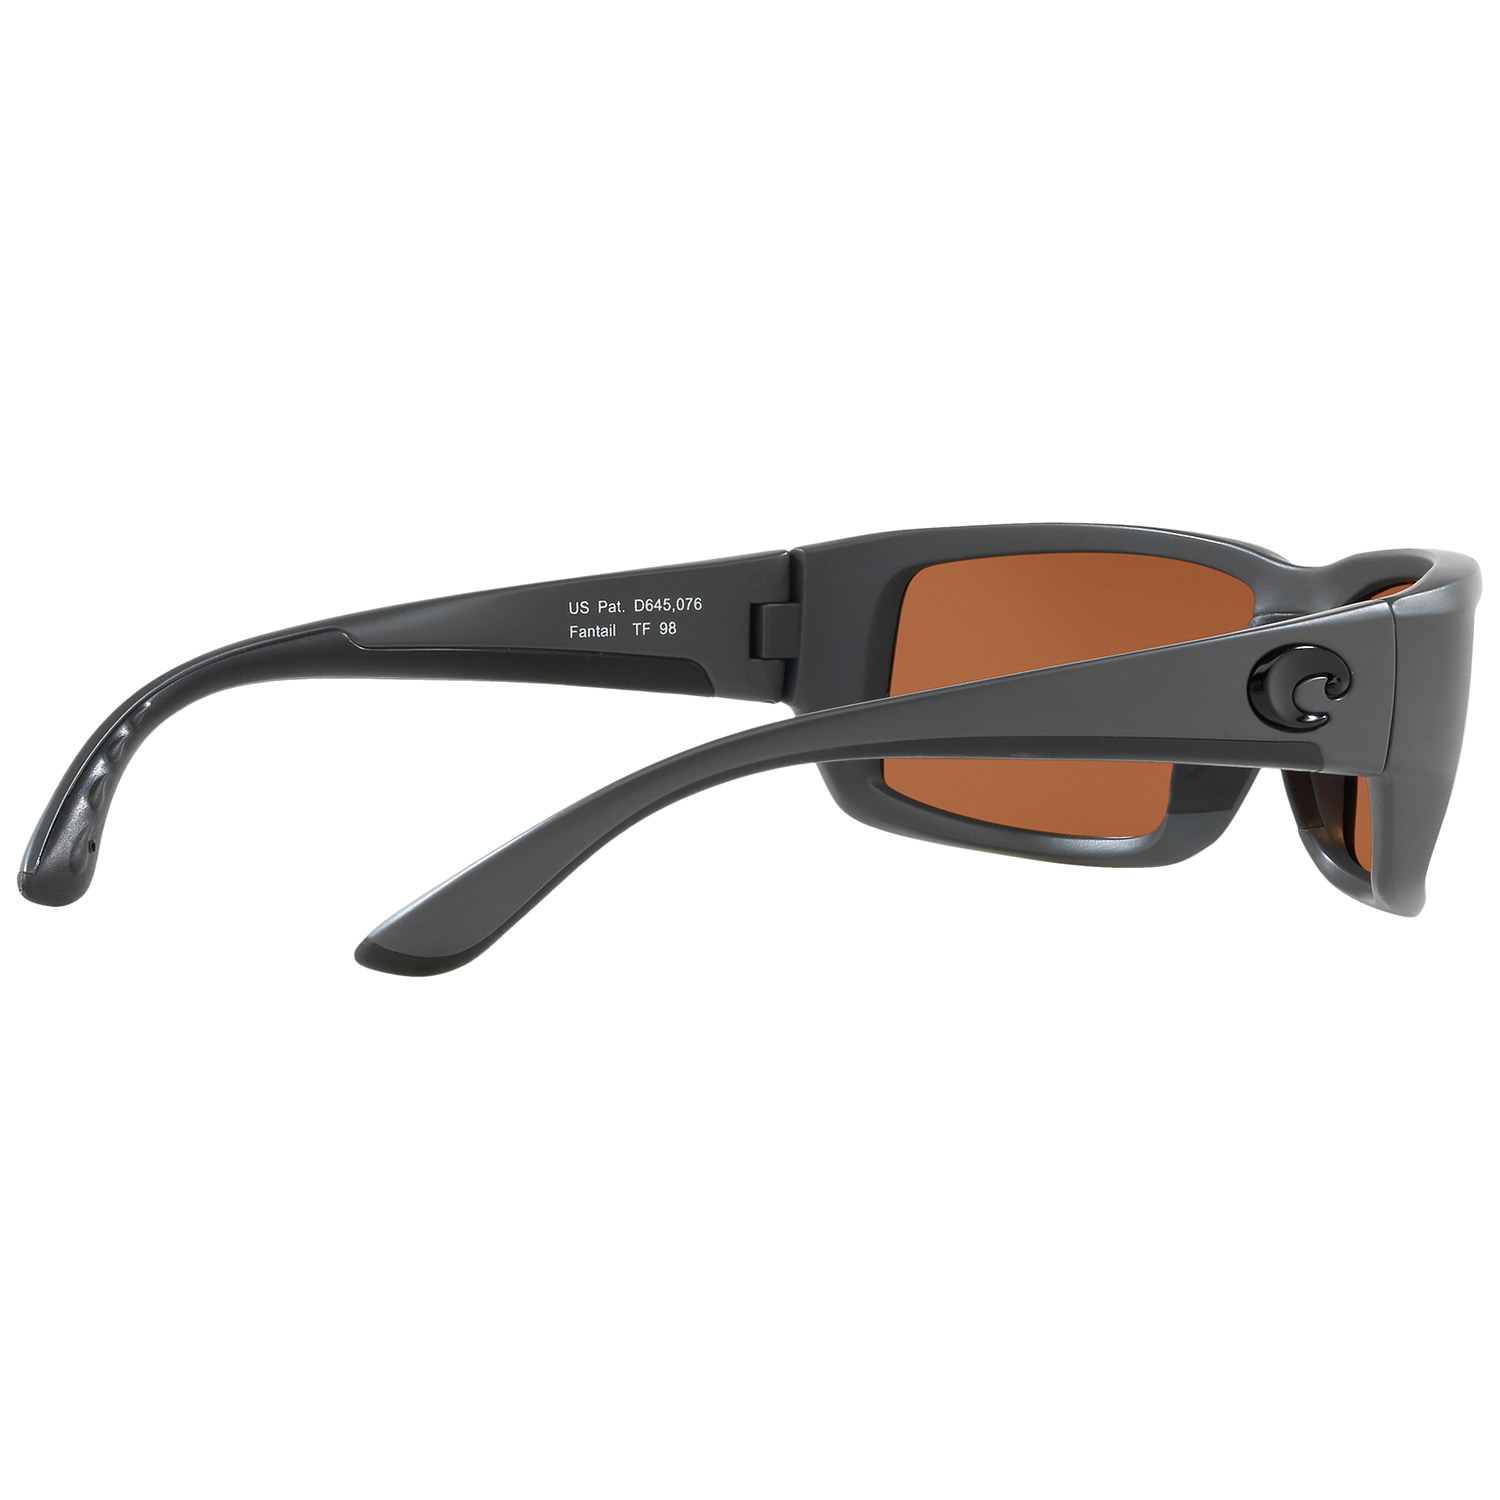 COSTA Fantail Polarized Sunglasses